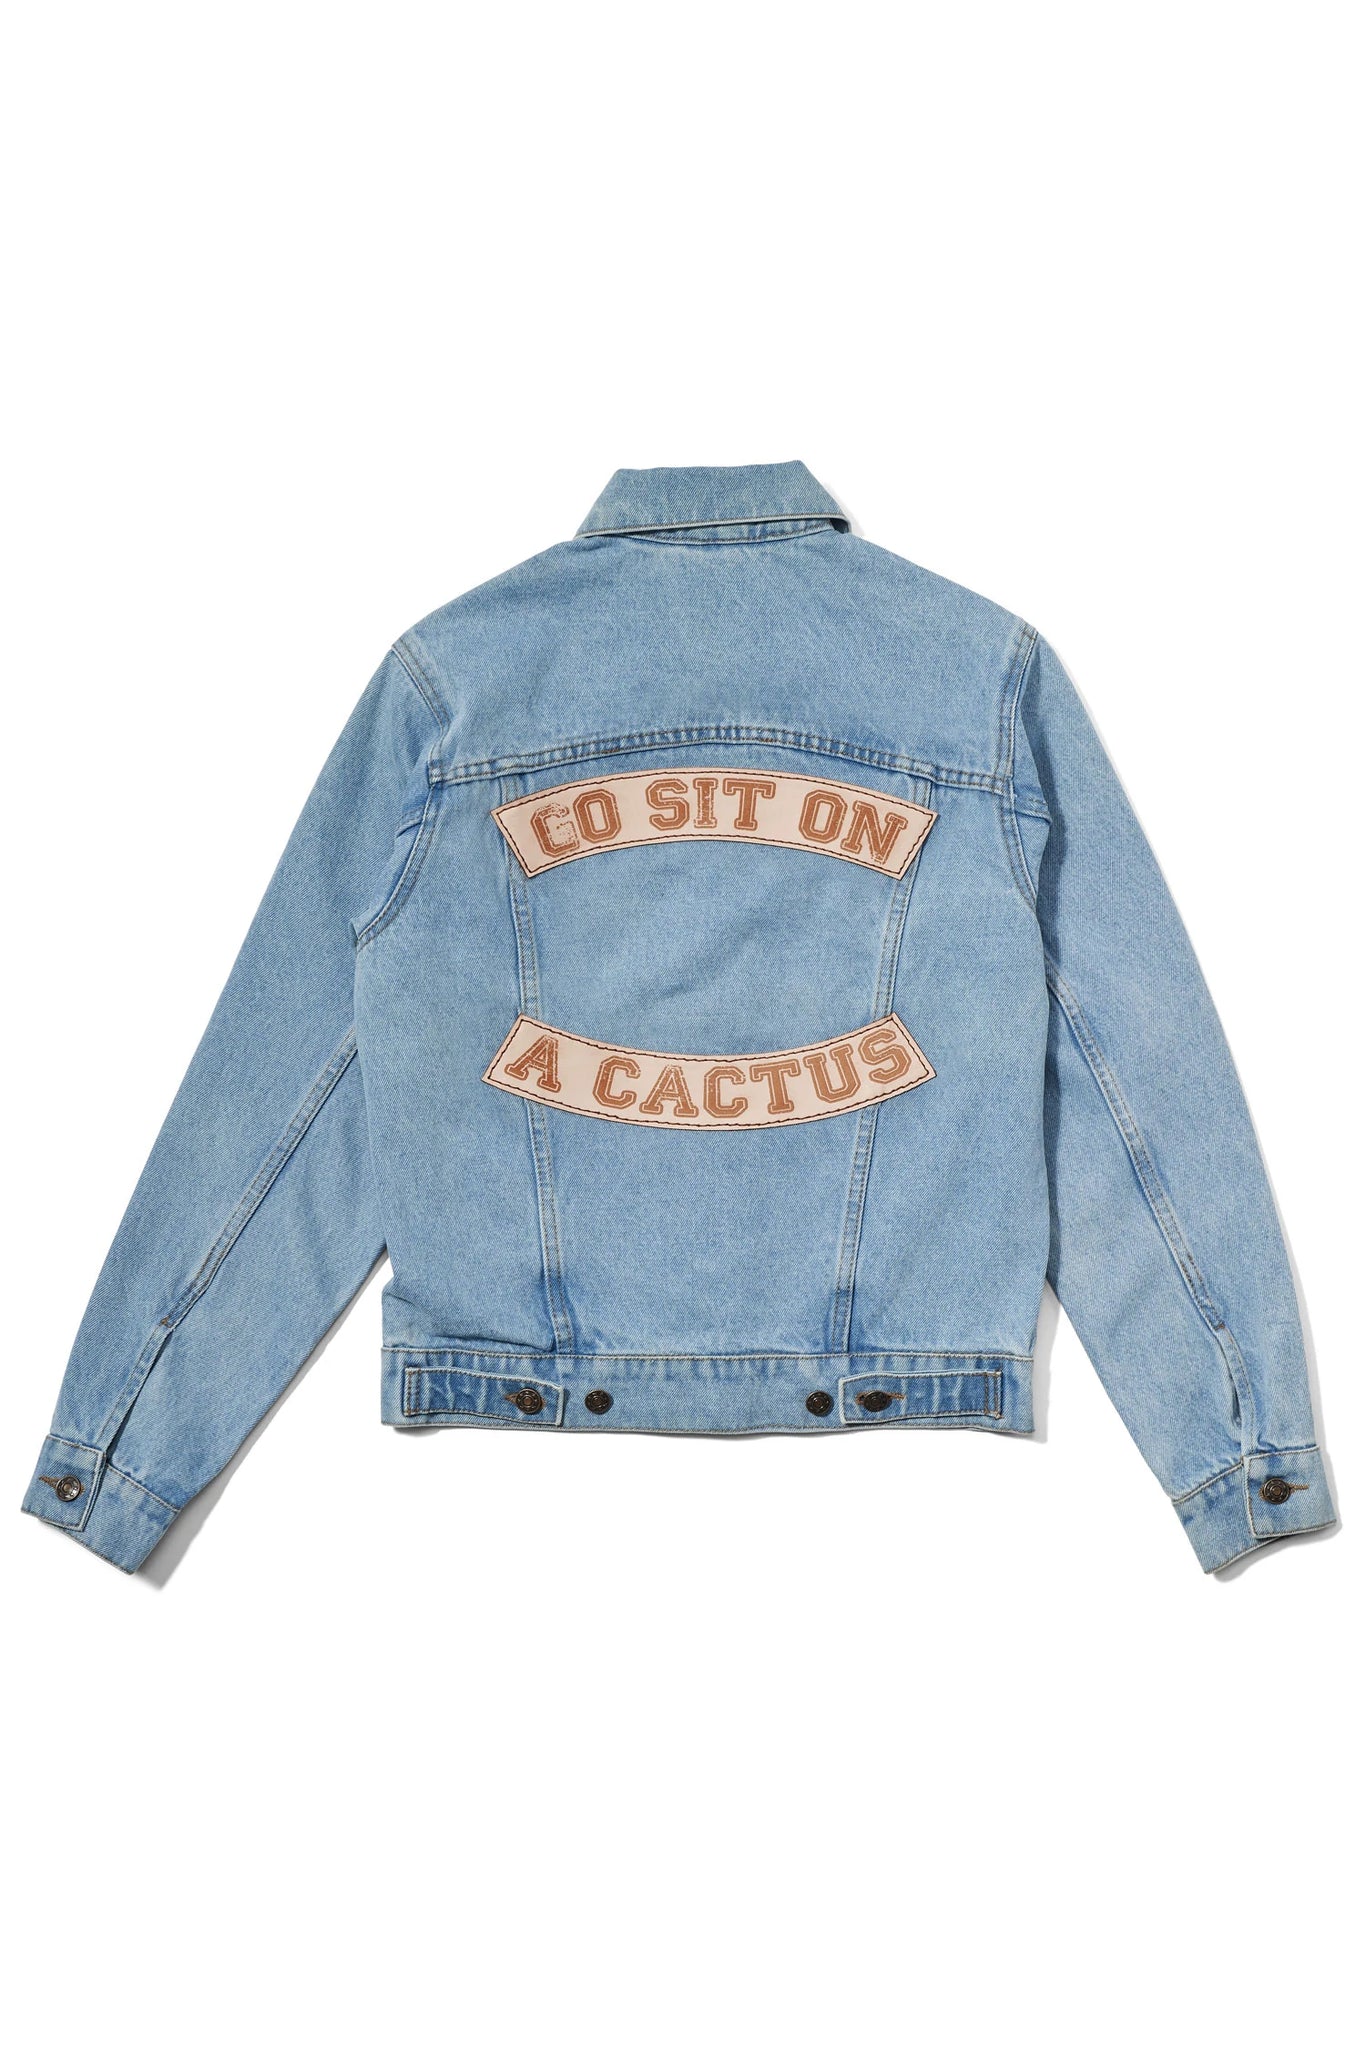 Go Sit On A Cactus Jacket- Denim